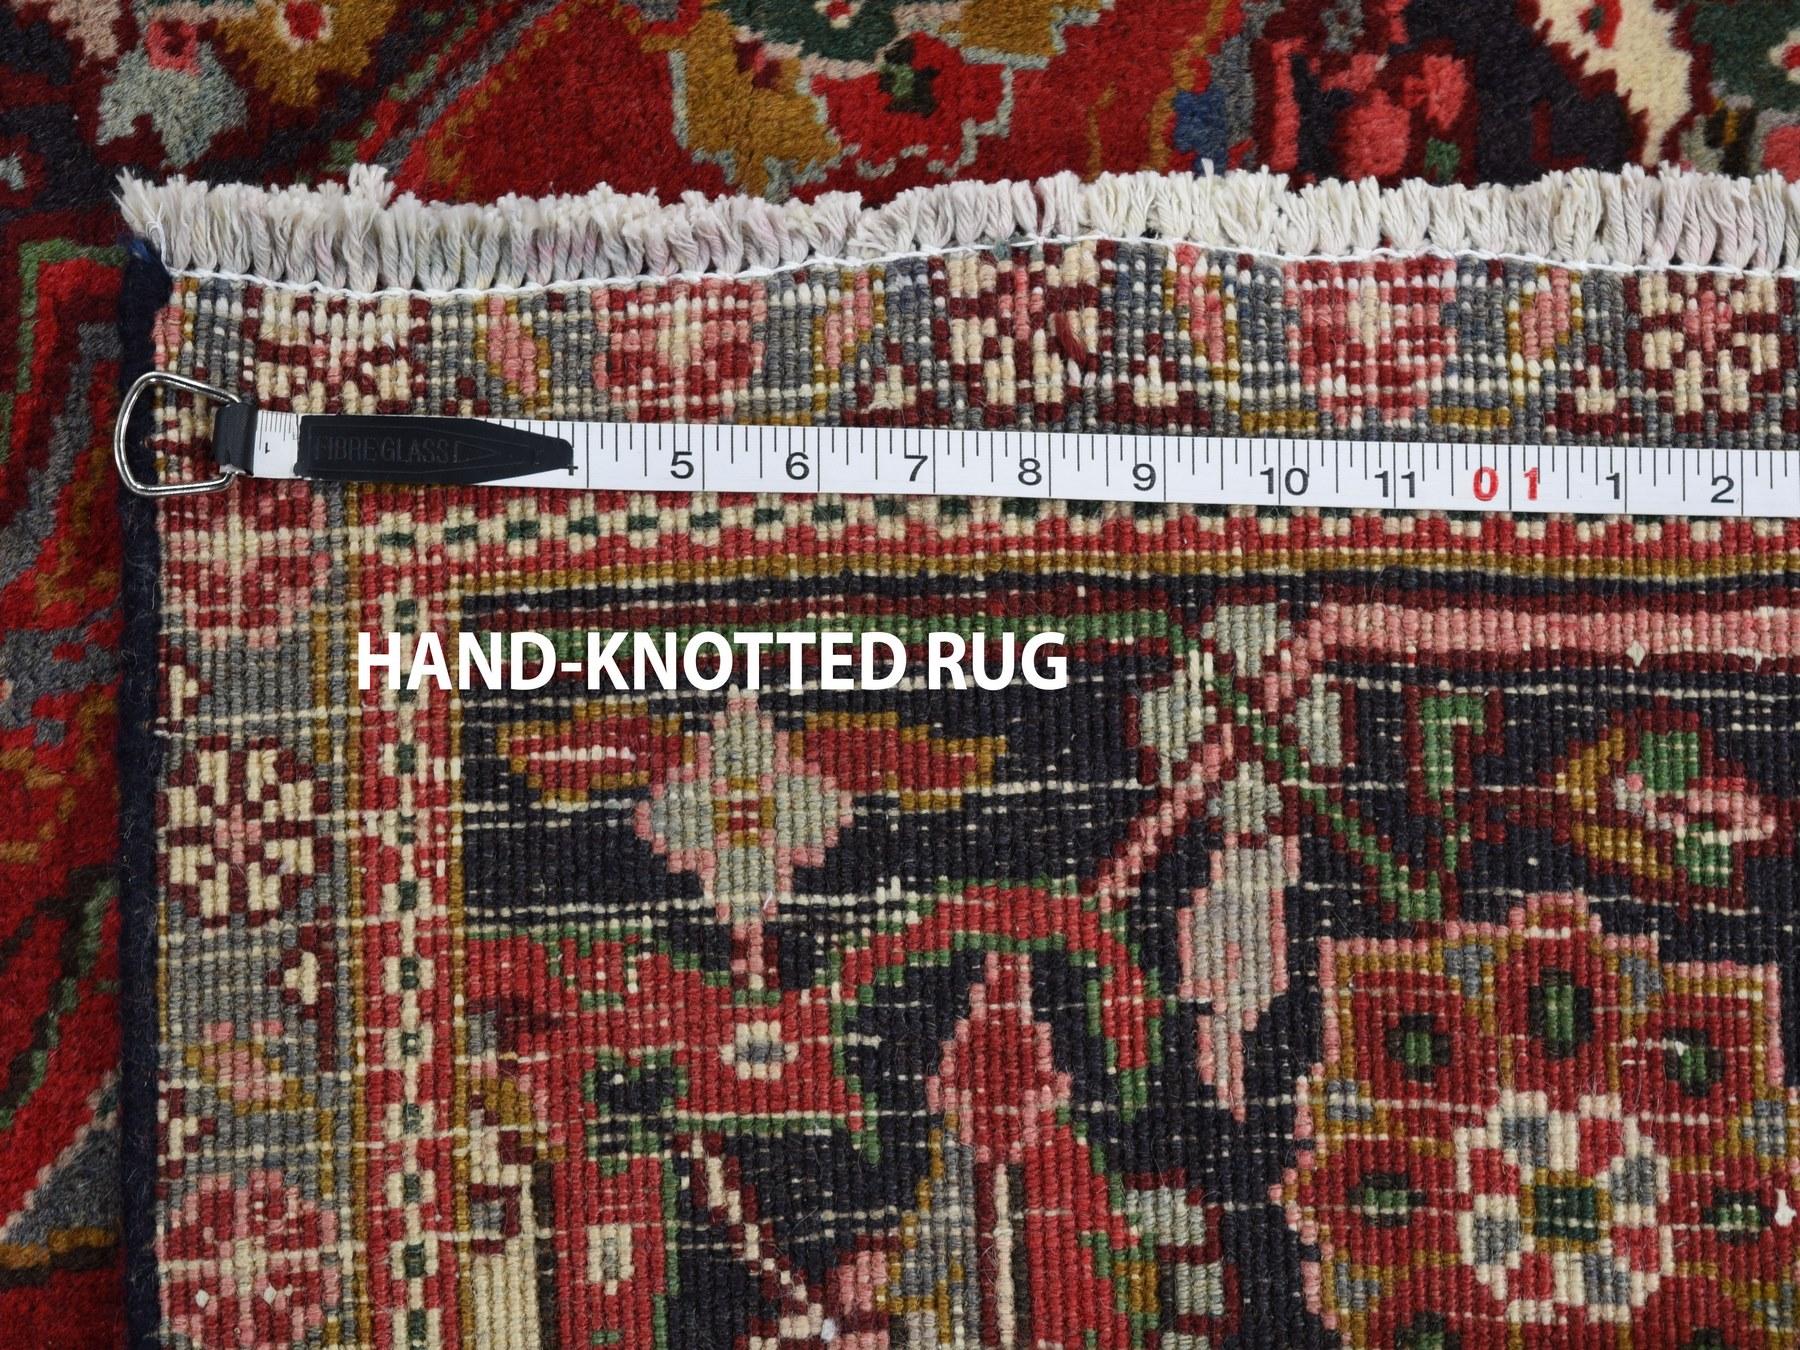 Red, Vintage Persian Heriz Flower Design Hand Knotted Oriental Rug, 7'10